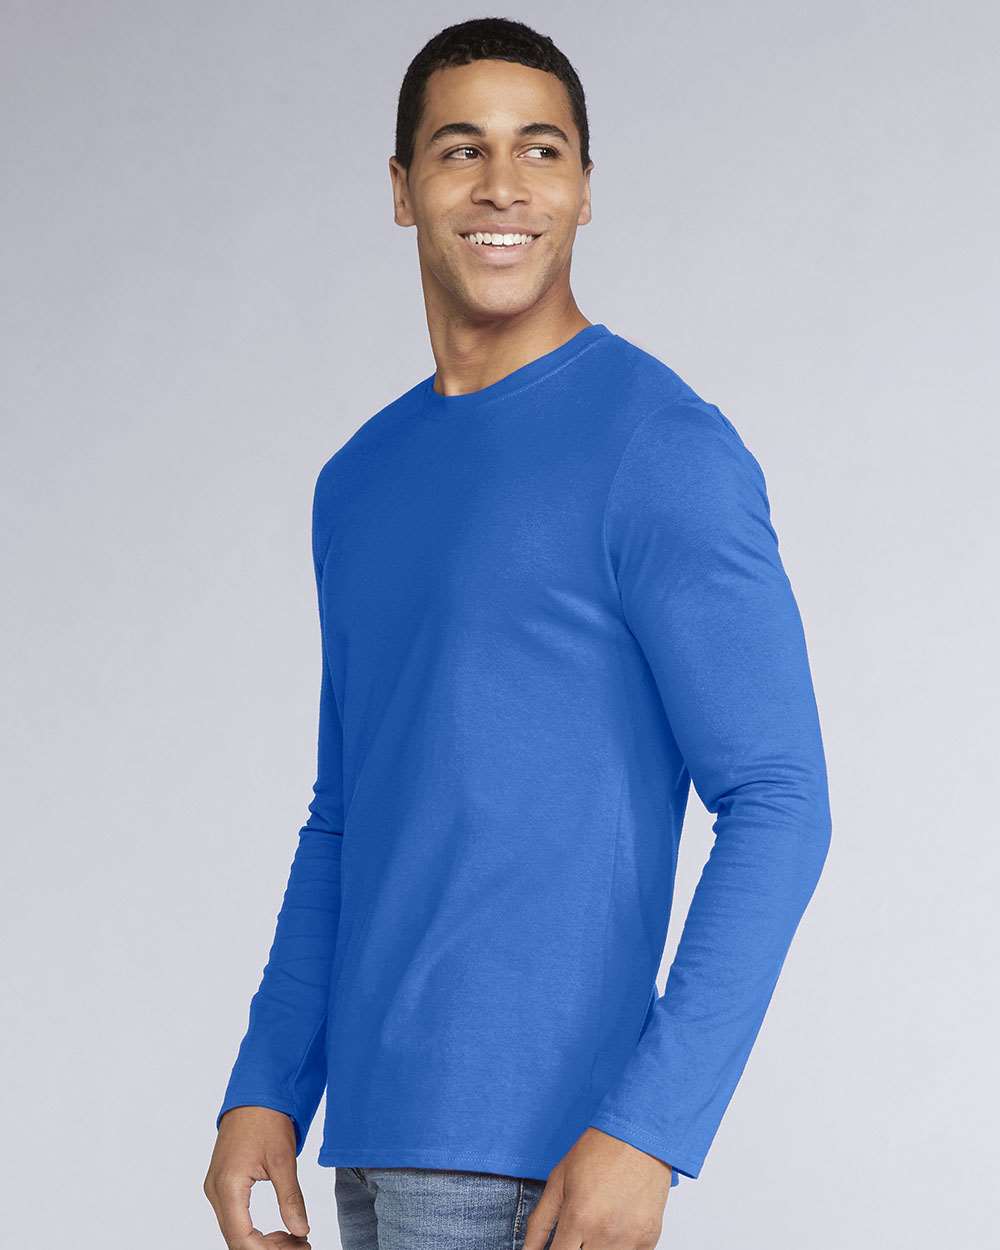 Gildan Mens Blank Cotton Softstyle Long Sleeve Fit T Shirt 64400